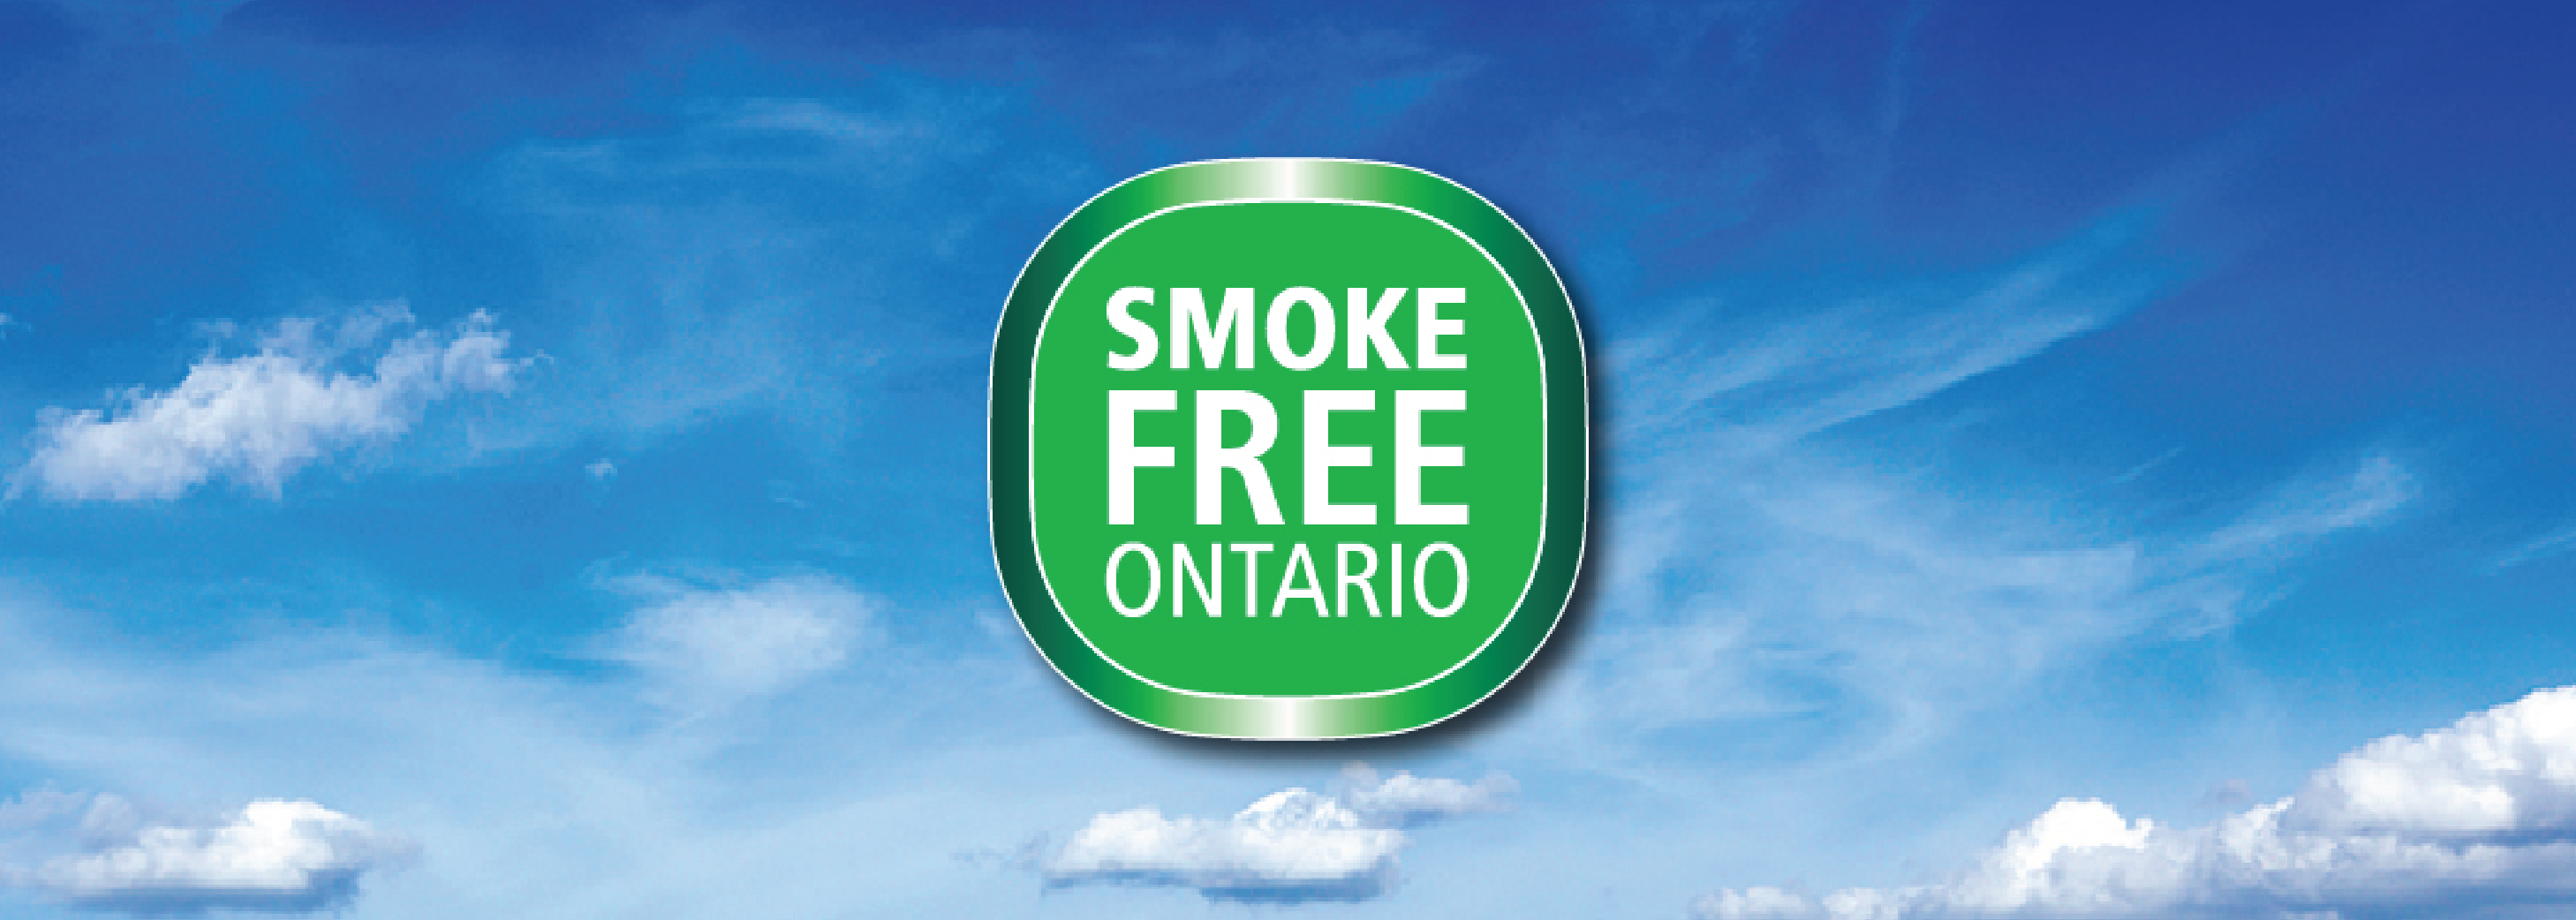 Smoke-Free Ontario logo on cloudy sky background